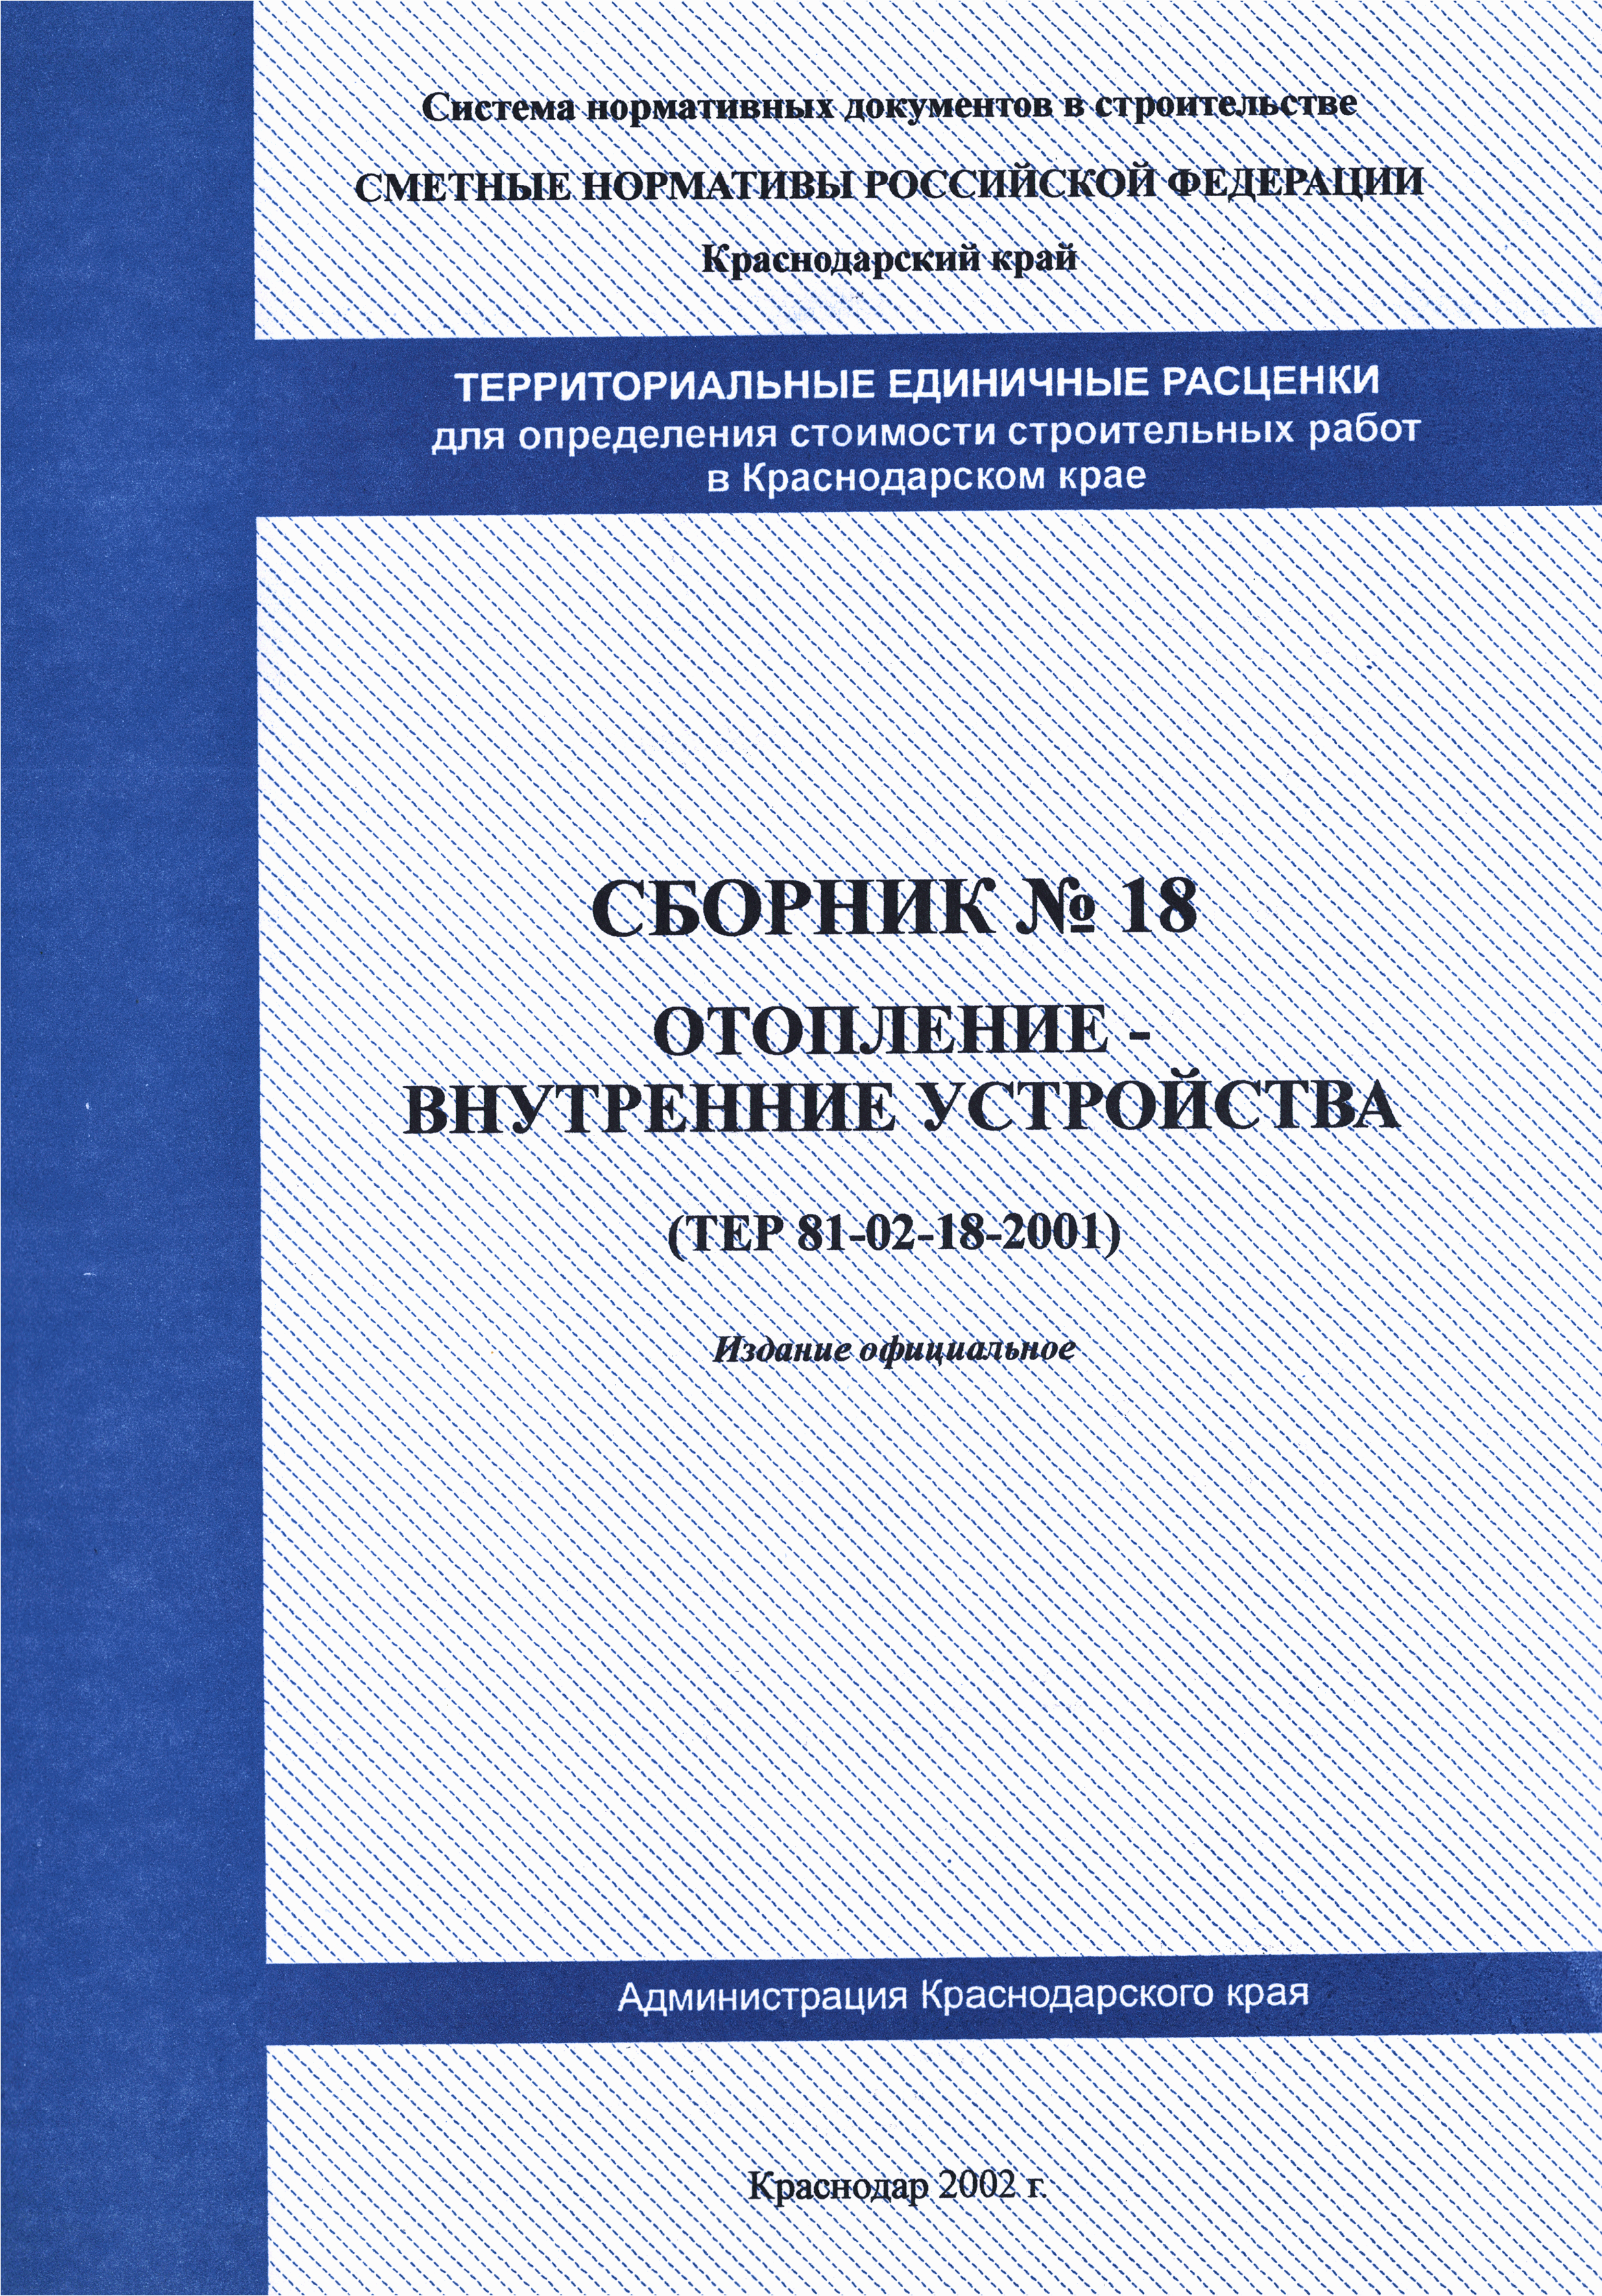 ТЕР Краснодарского края 2001-18